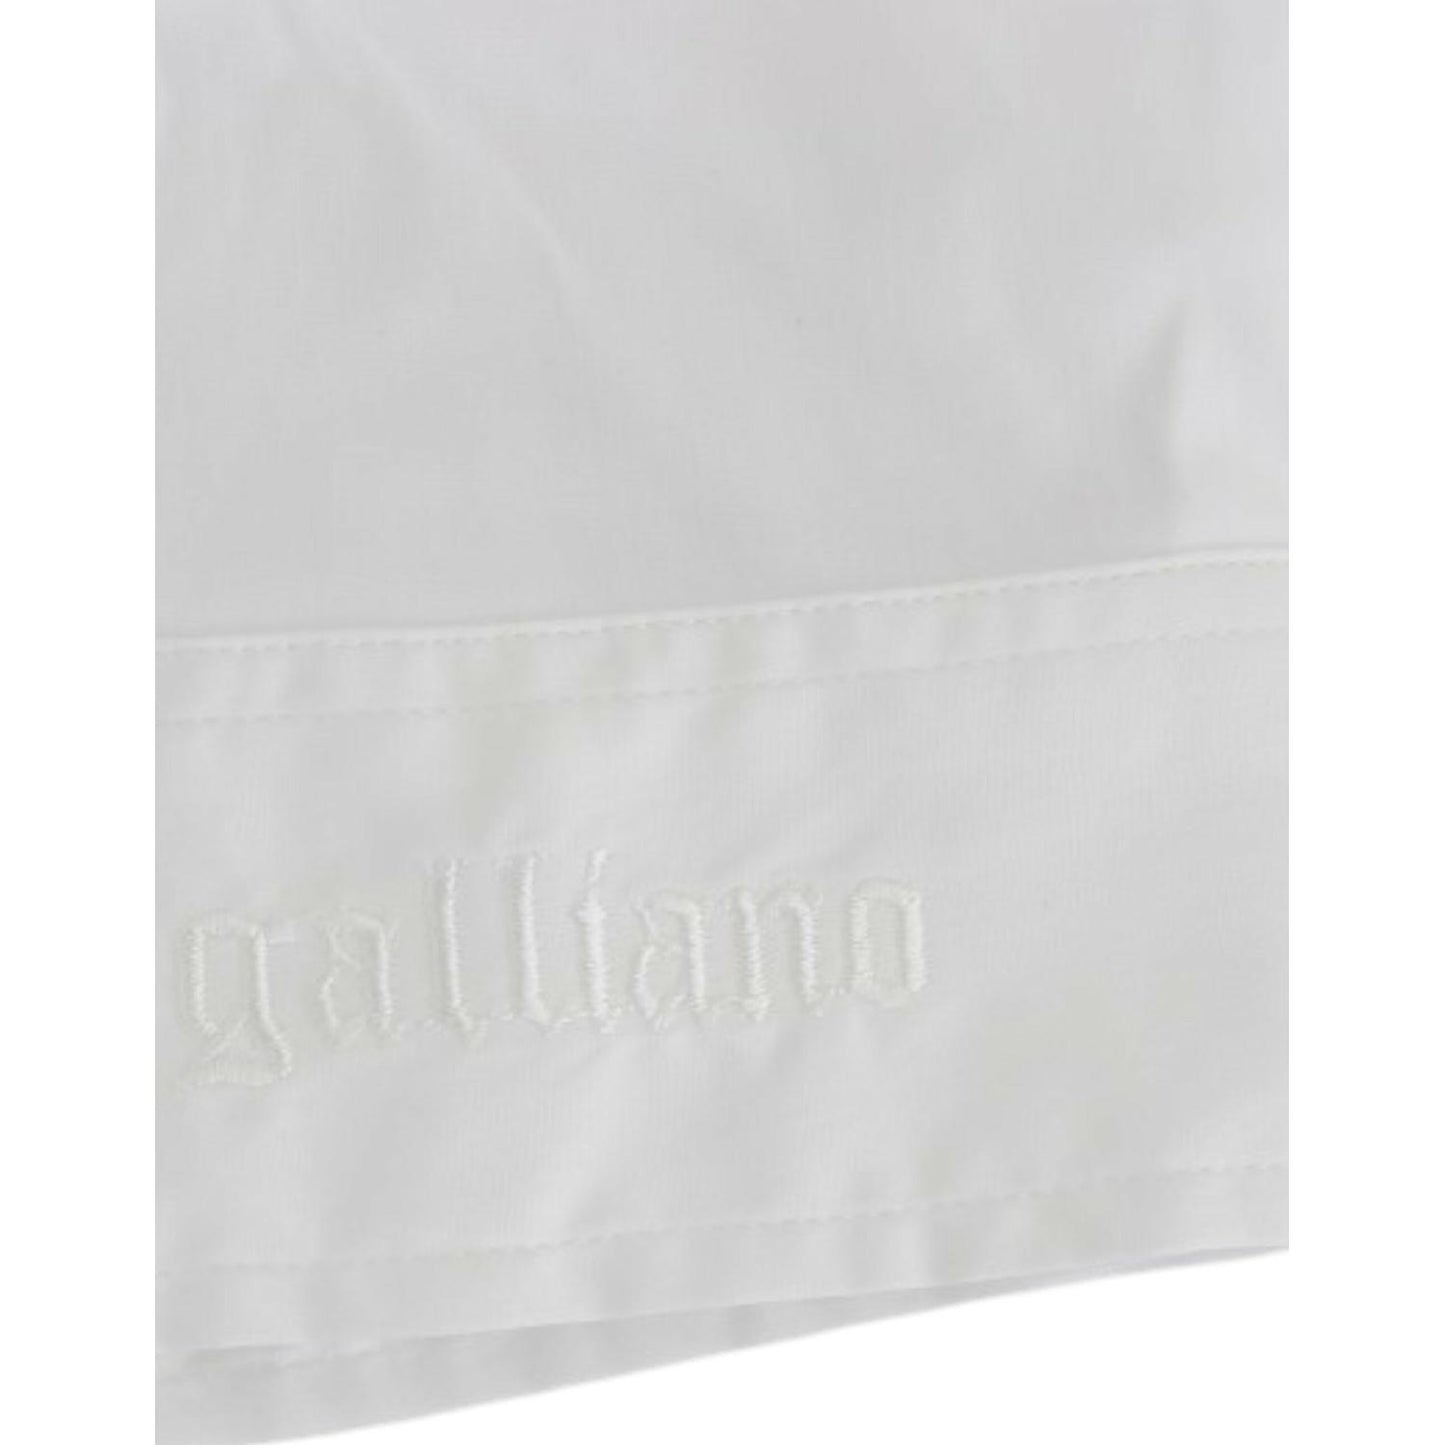 John Galliano Chic White Cotton Blend Shortsleeve Blouse white-cotton-shirt-top